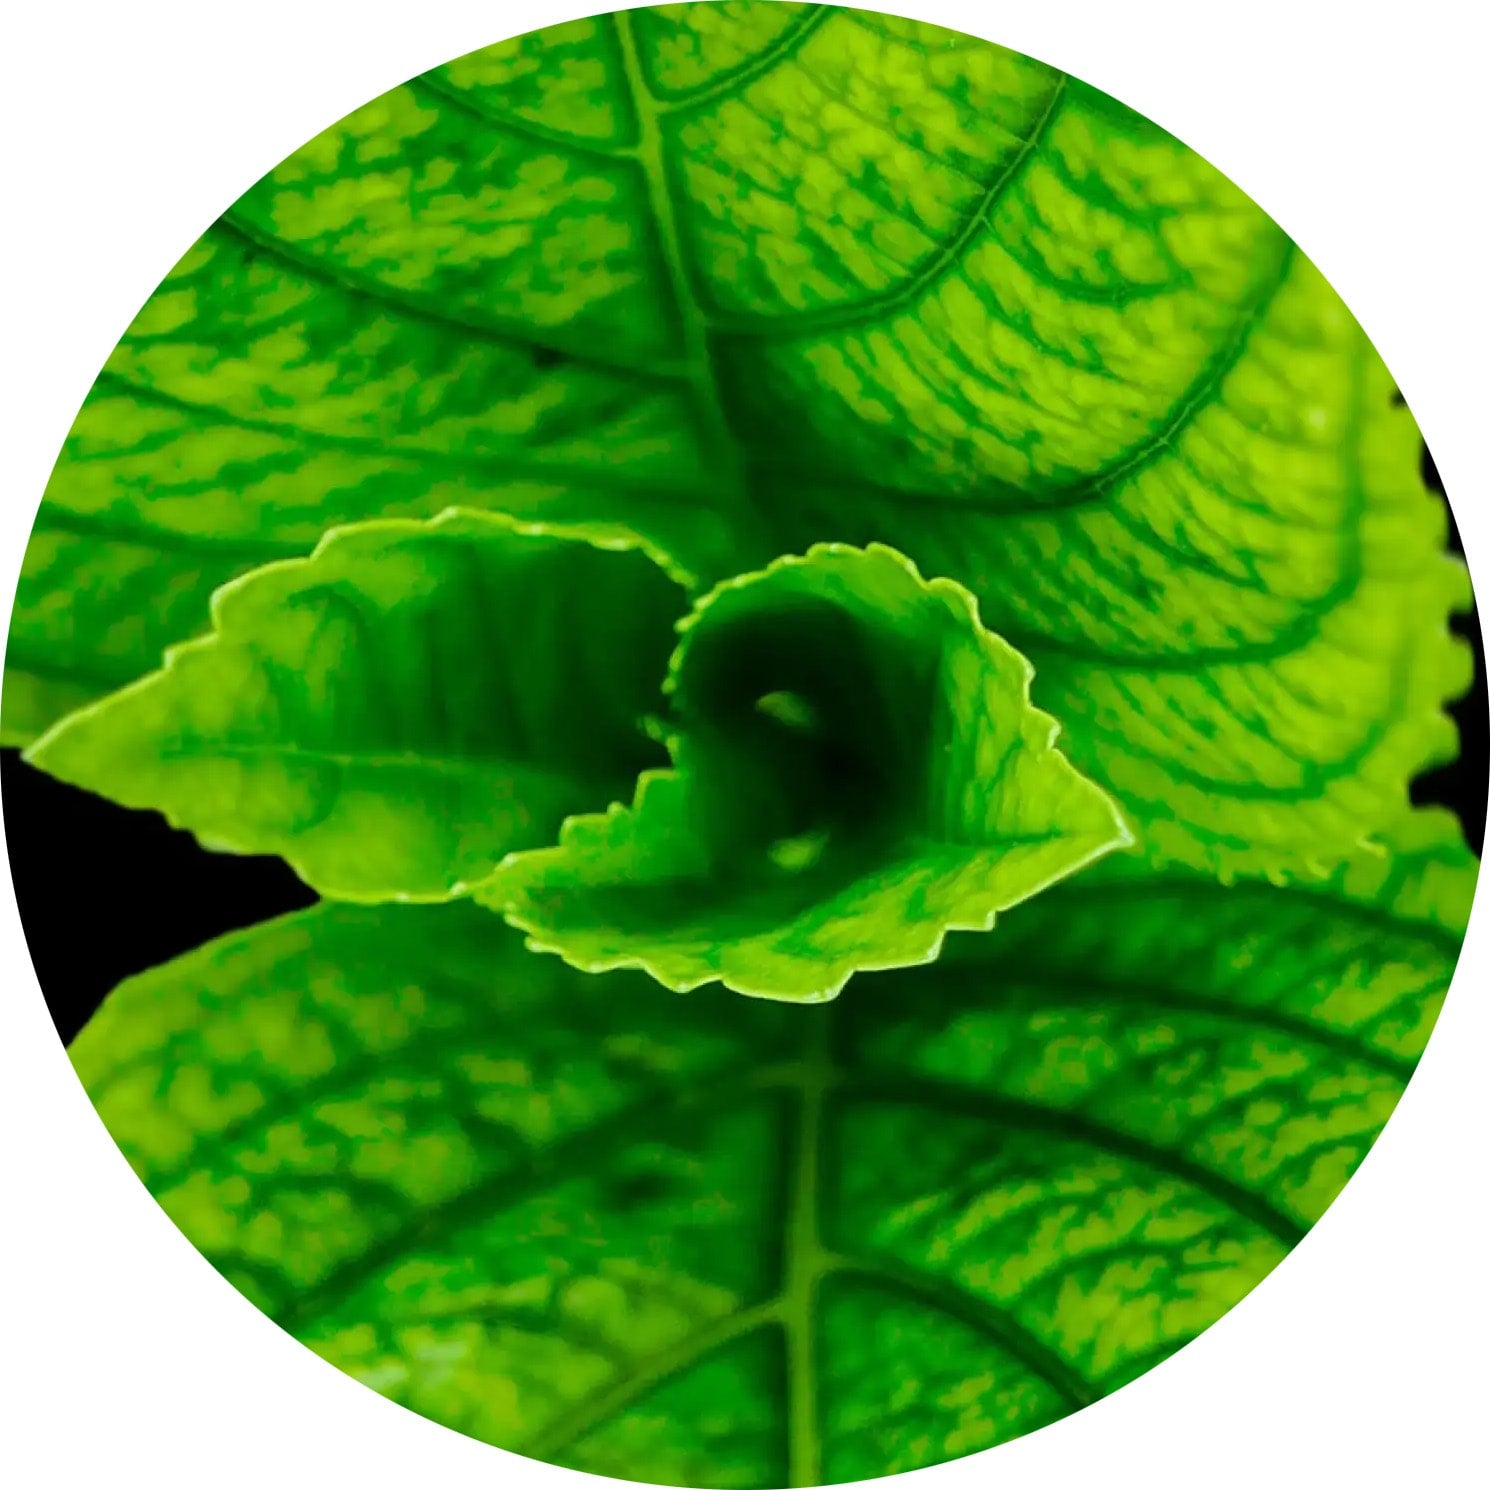 close up image of a menthol leaf